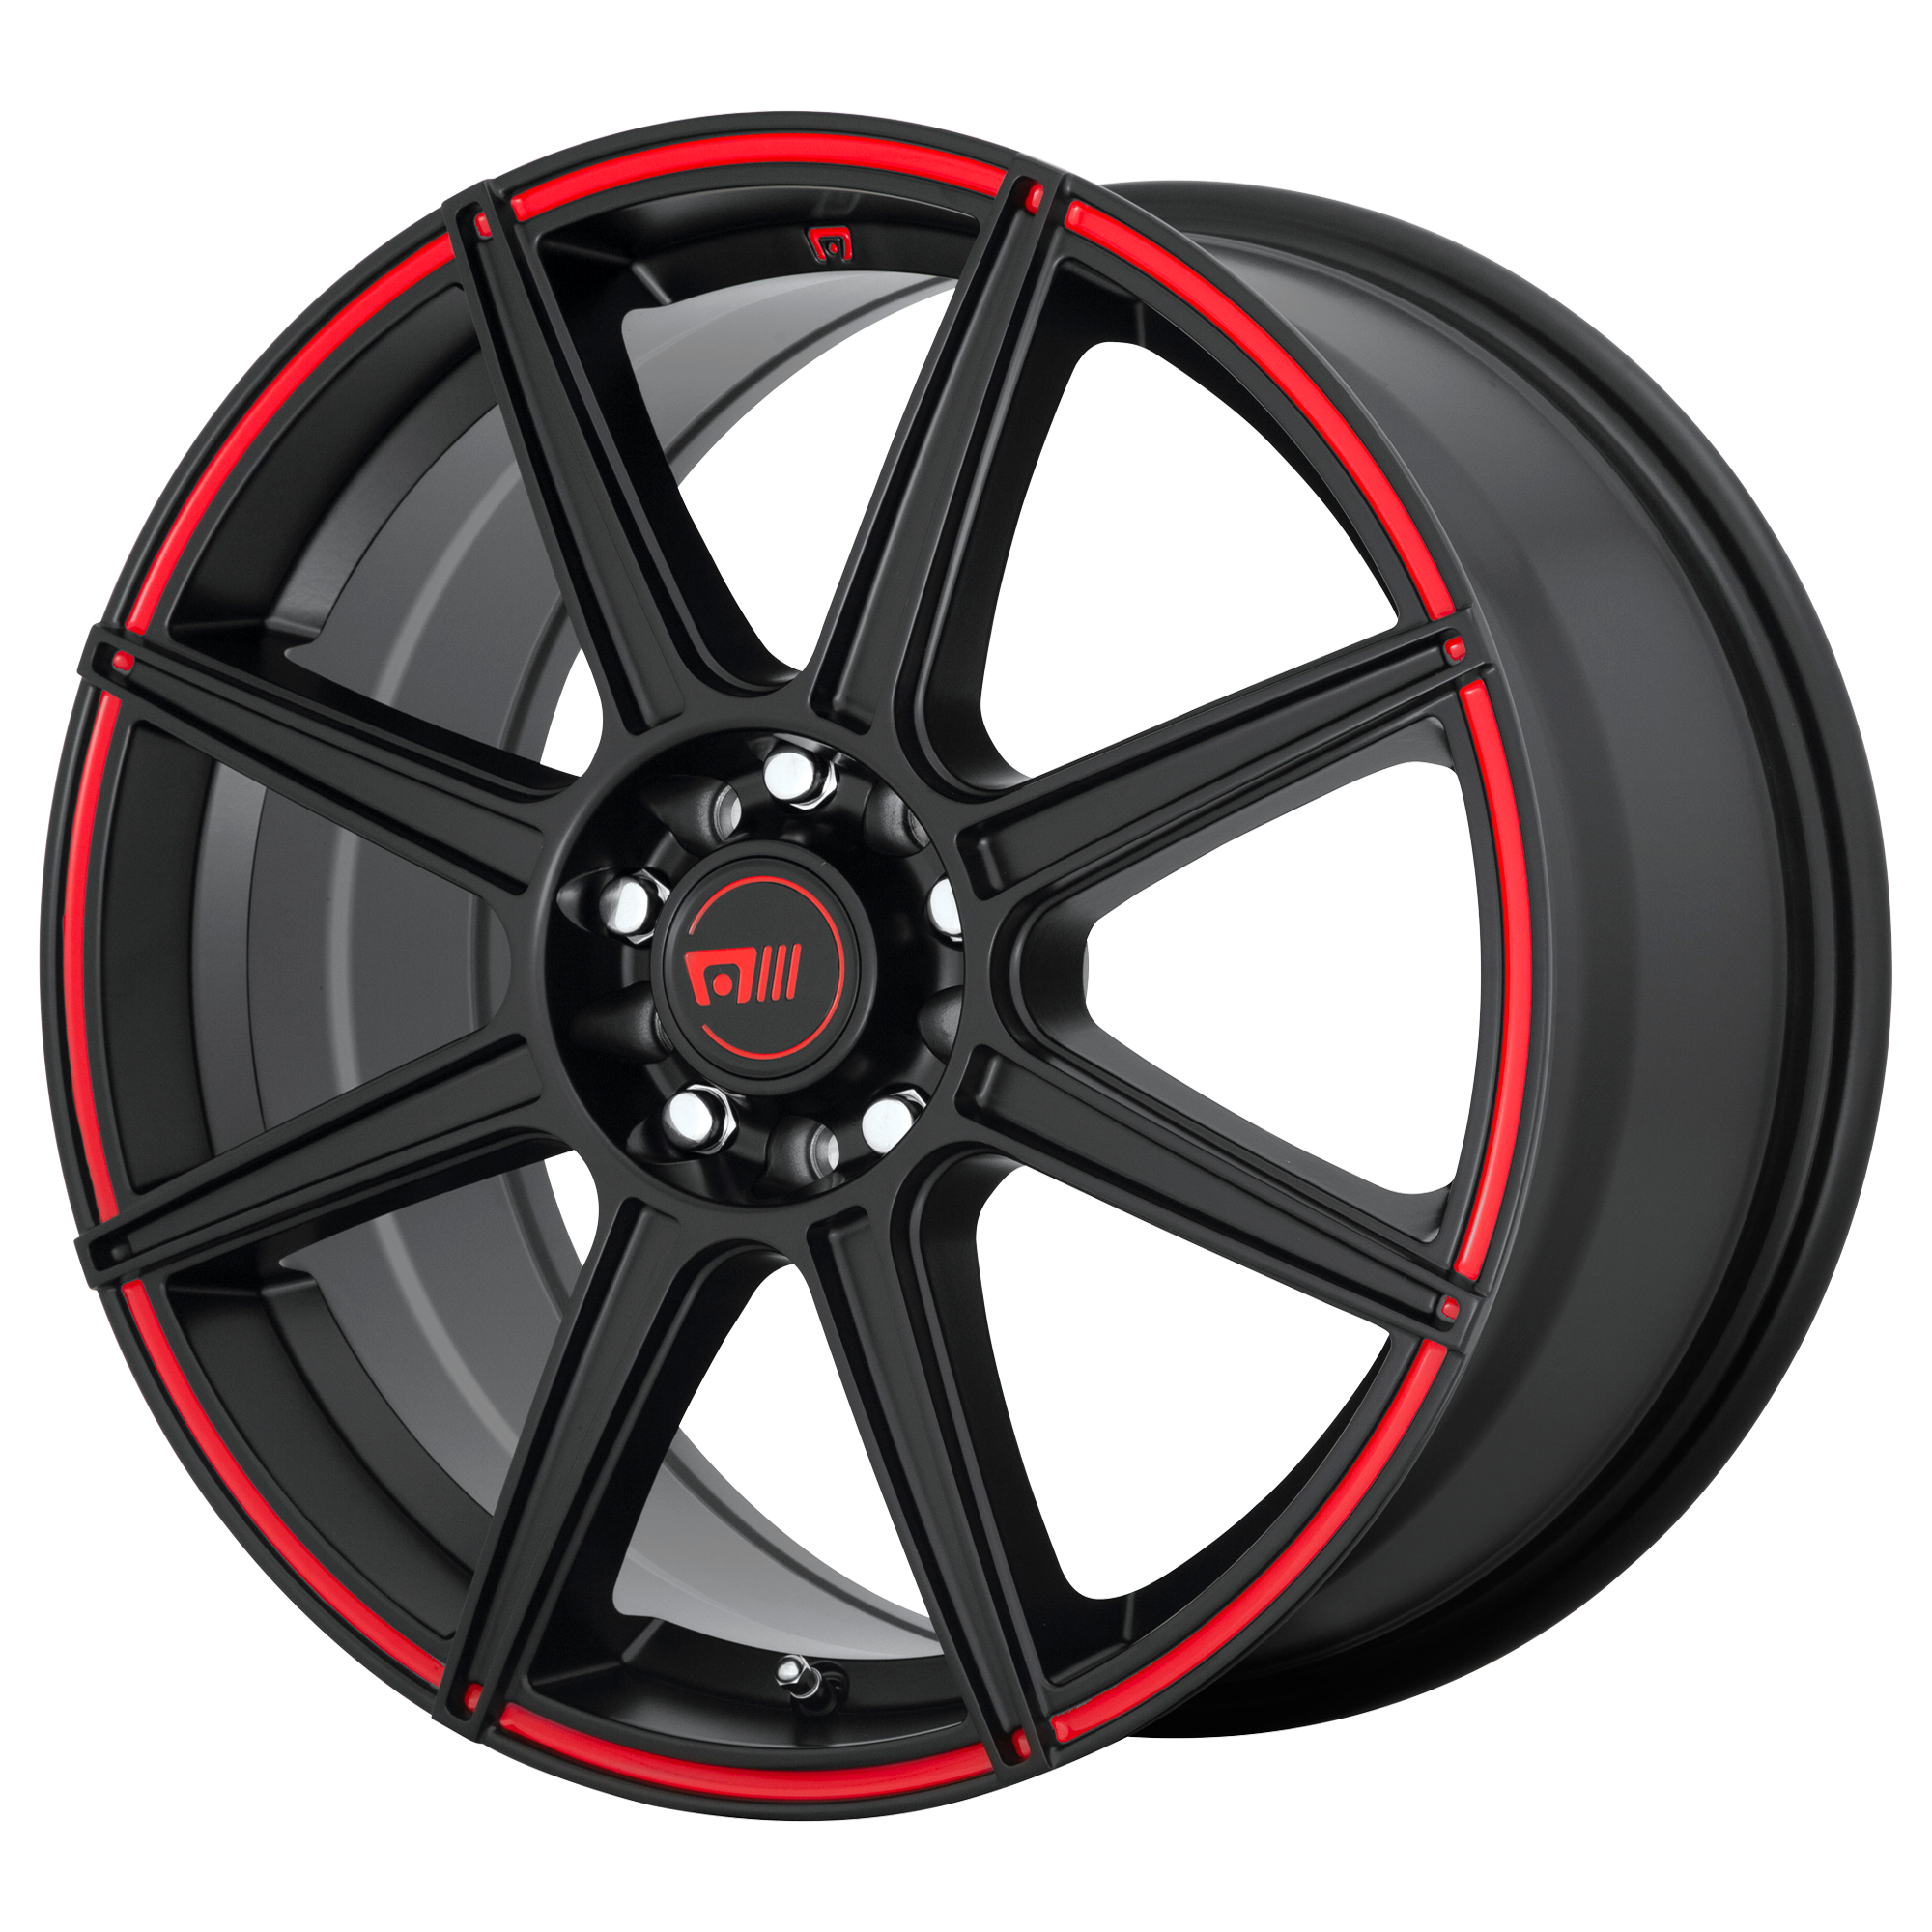 CS8 17x7 5x108.00/5x114.30 SATIN BLACK W/ RED STRIPE (40 mm) - Tires and Engine Performance